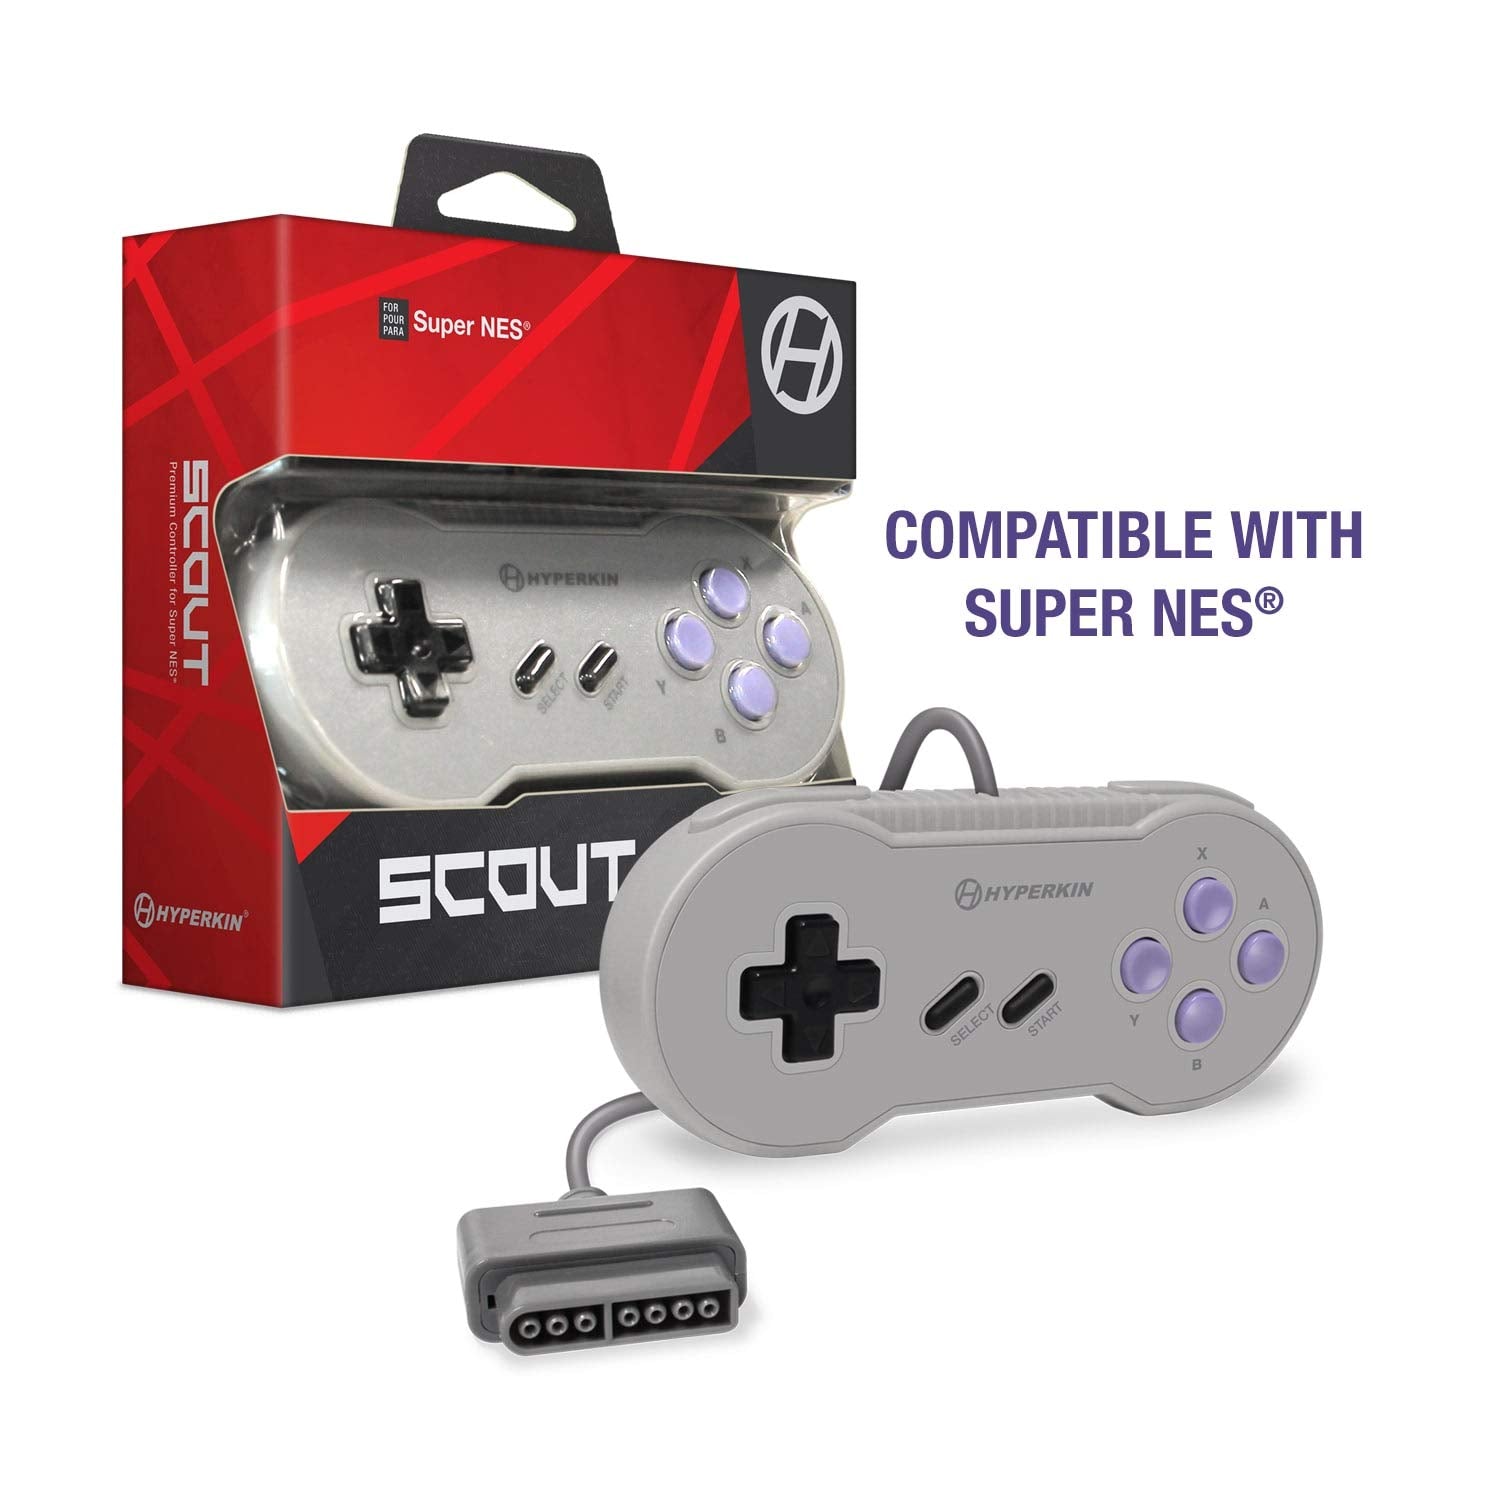 Hyperkin "Scout" Premium Controller for SNES - (SNES) Super Nintendo Accessories Hyperkin   